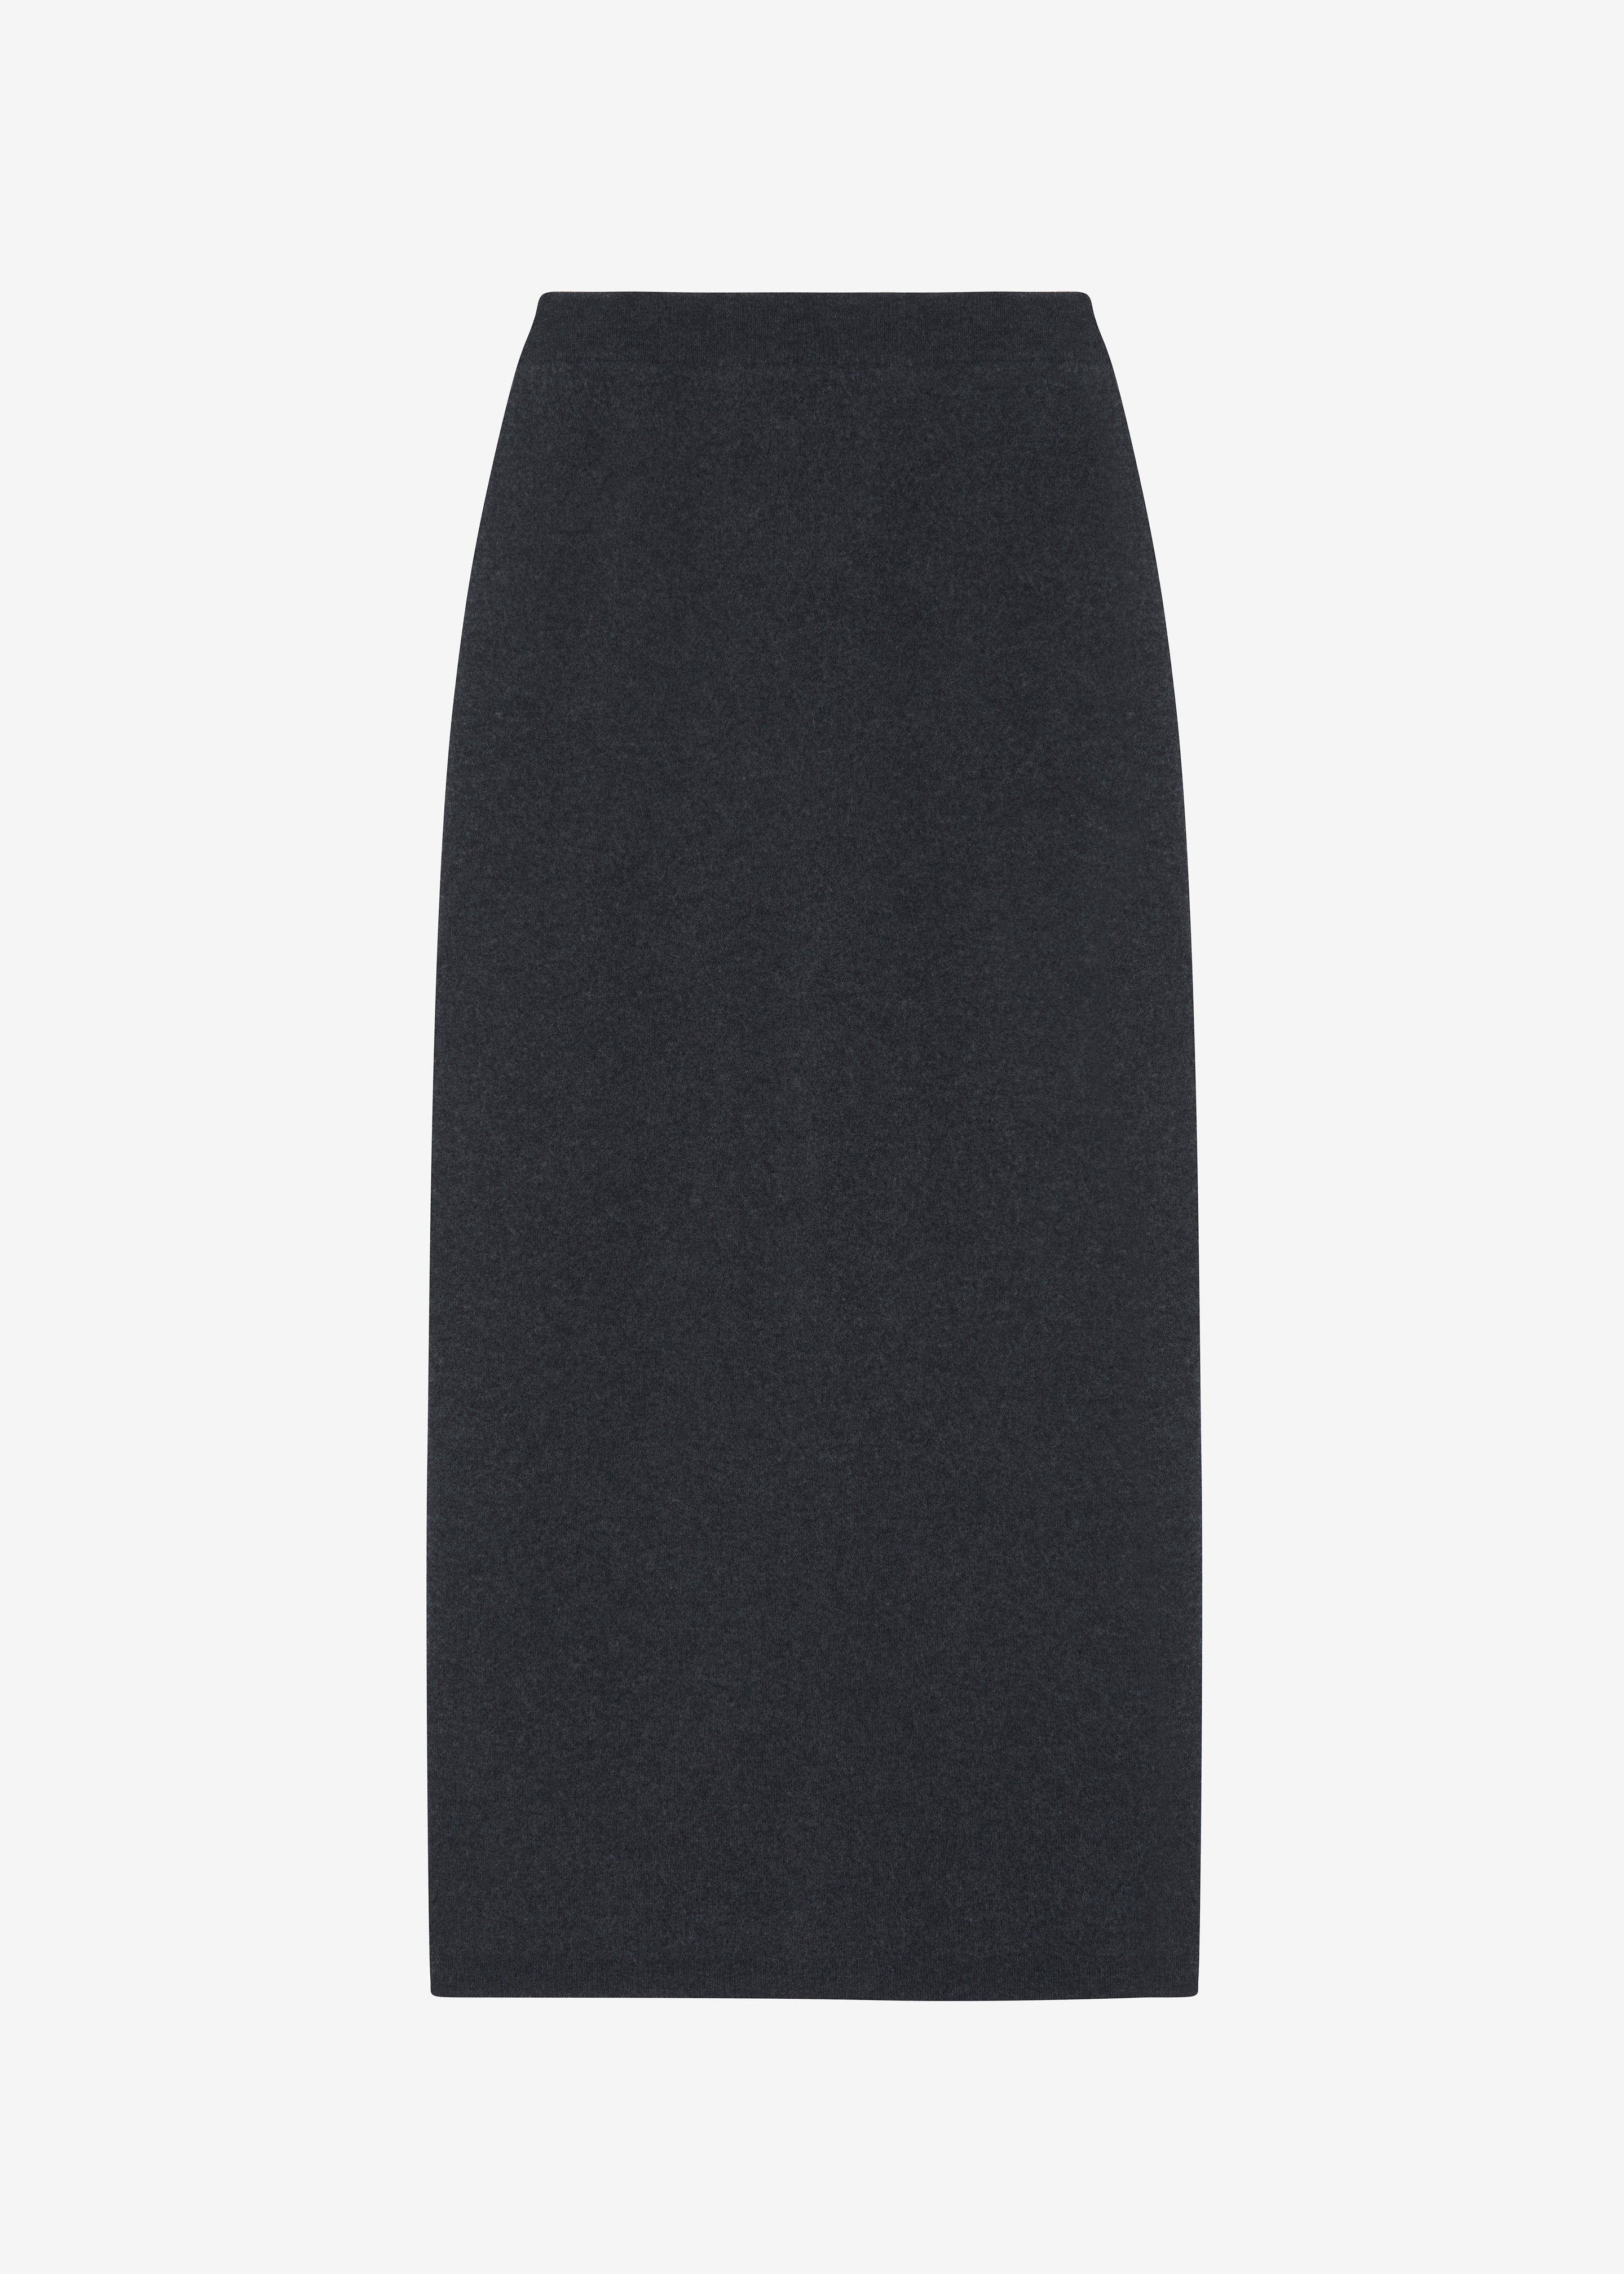 Bellamy Wool Skirt - Charcoal - 9